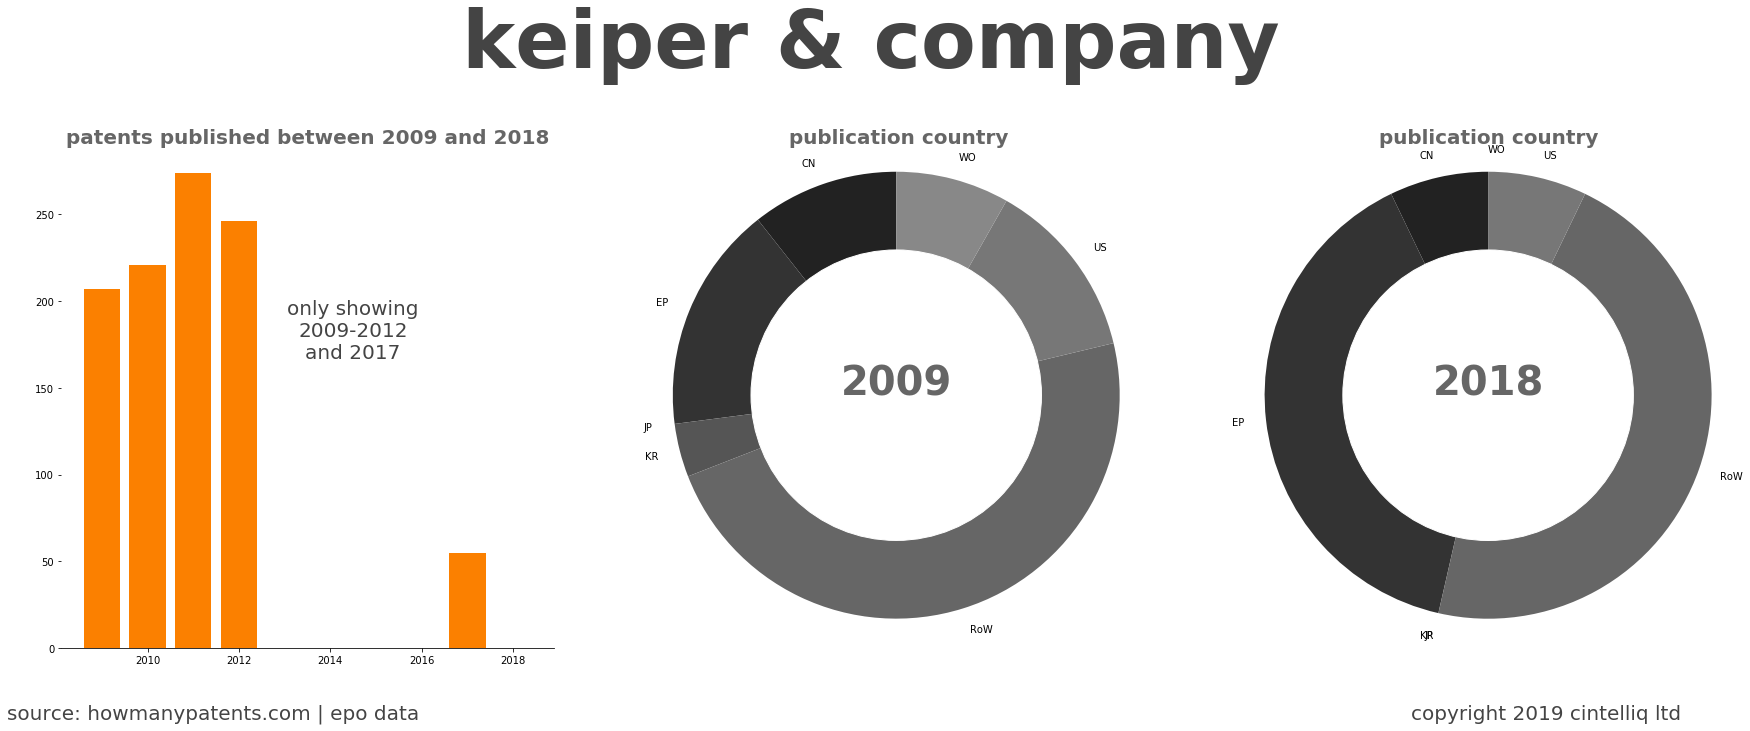 summary of patents for Keiper & Company